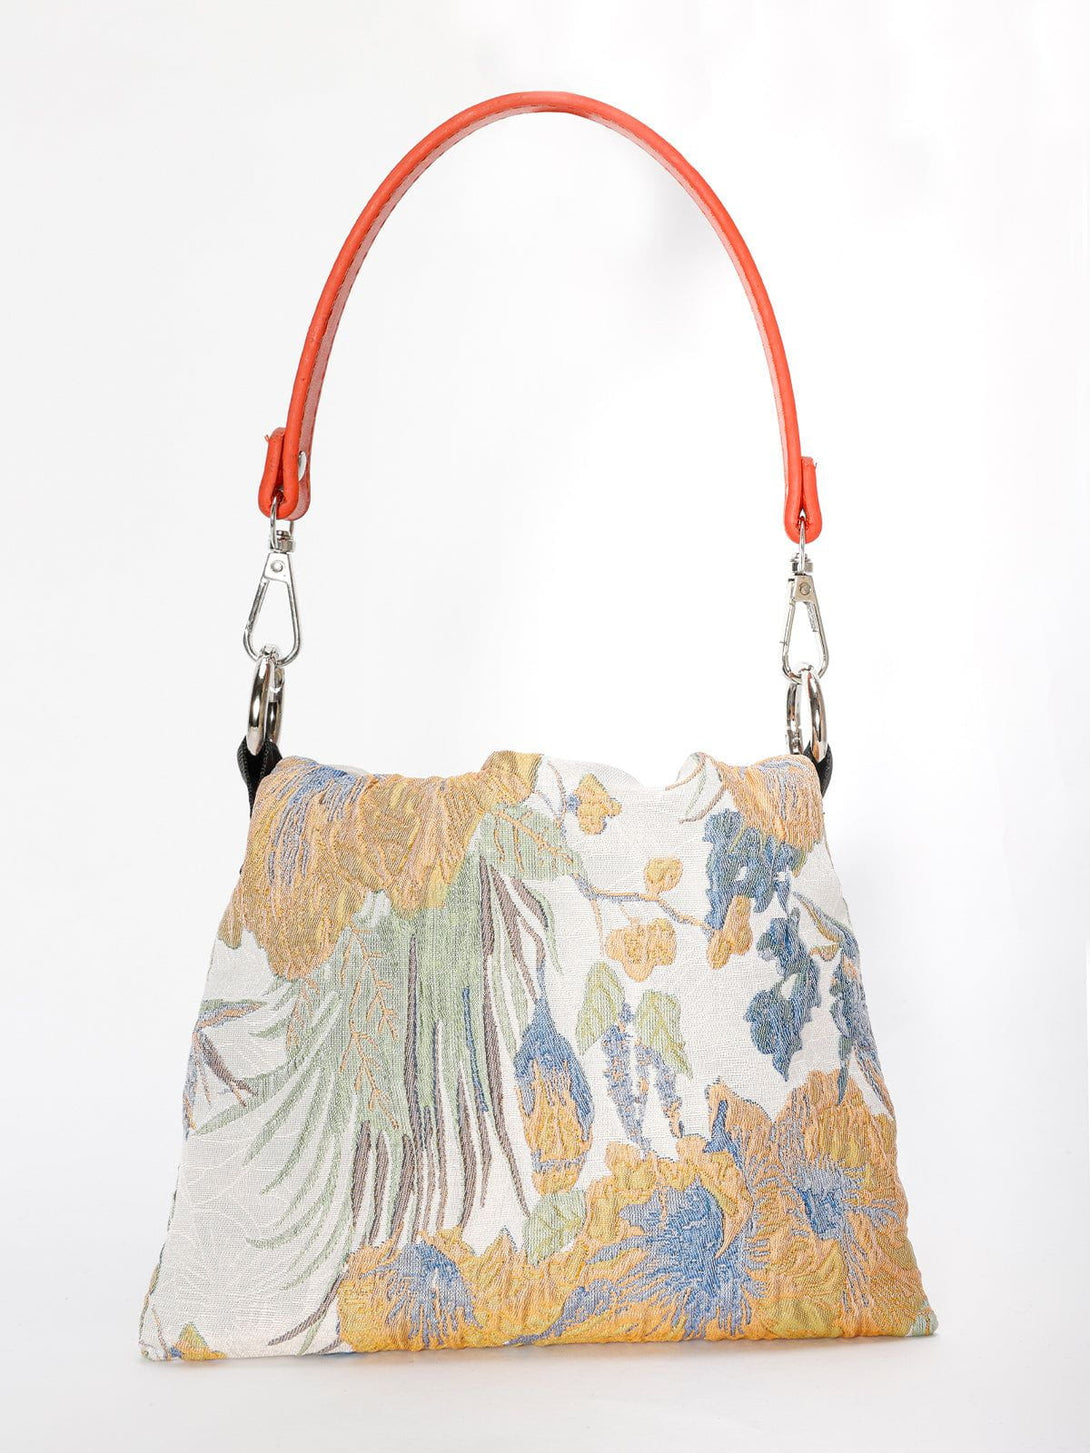 Majesda® - Original Desert Sisal Plant Relief Chain Bag- Outfit Ideas - Streetwear Fashion - majesda.com